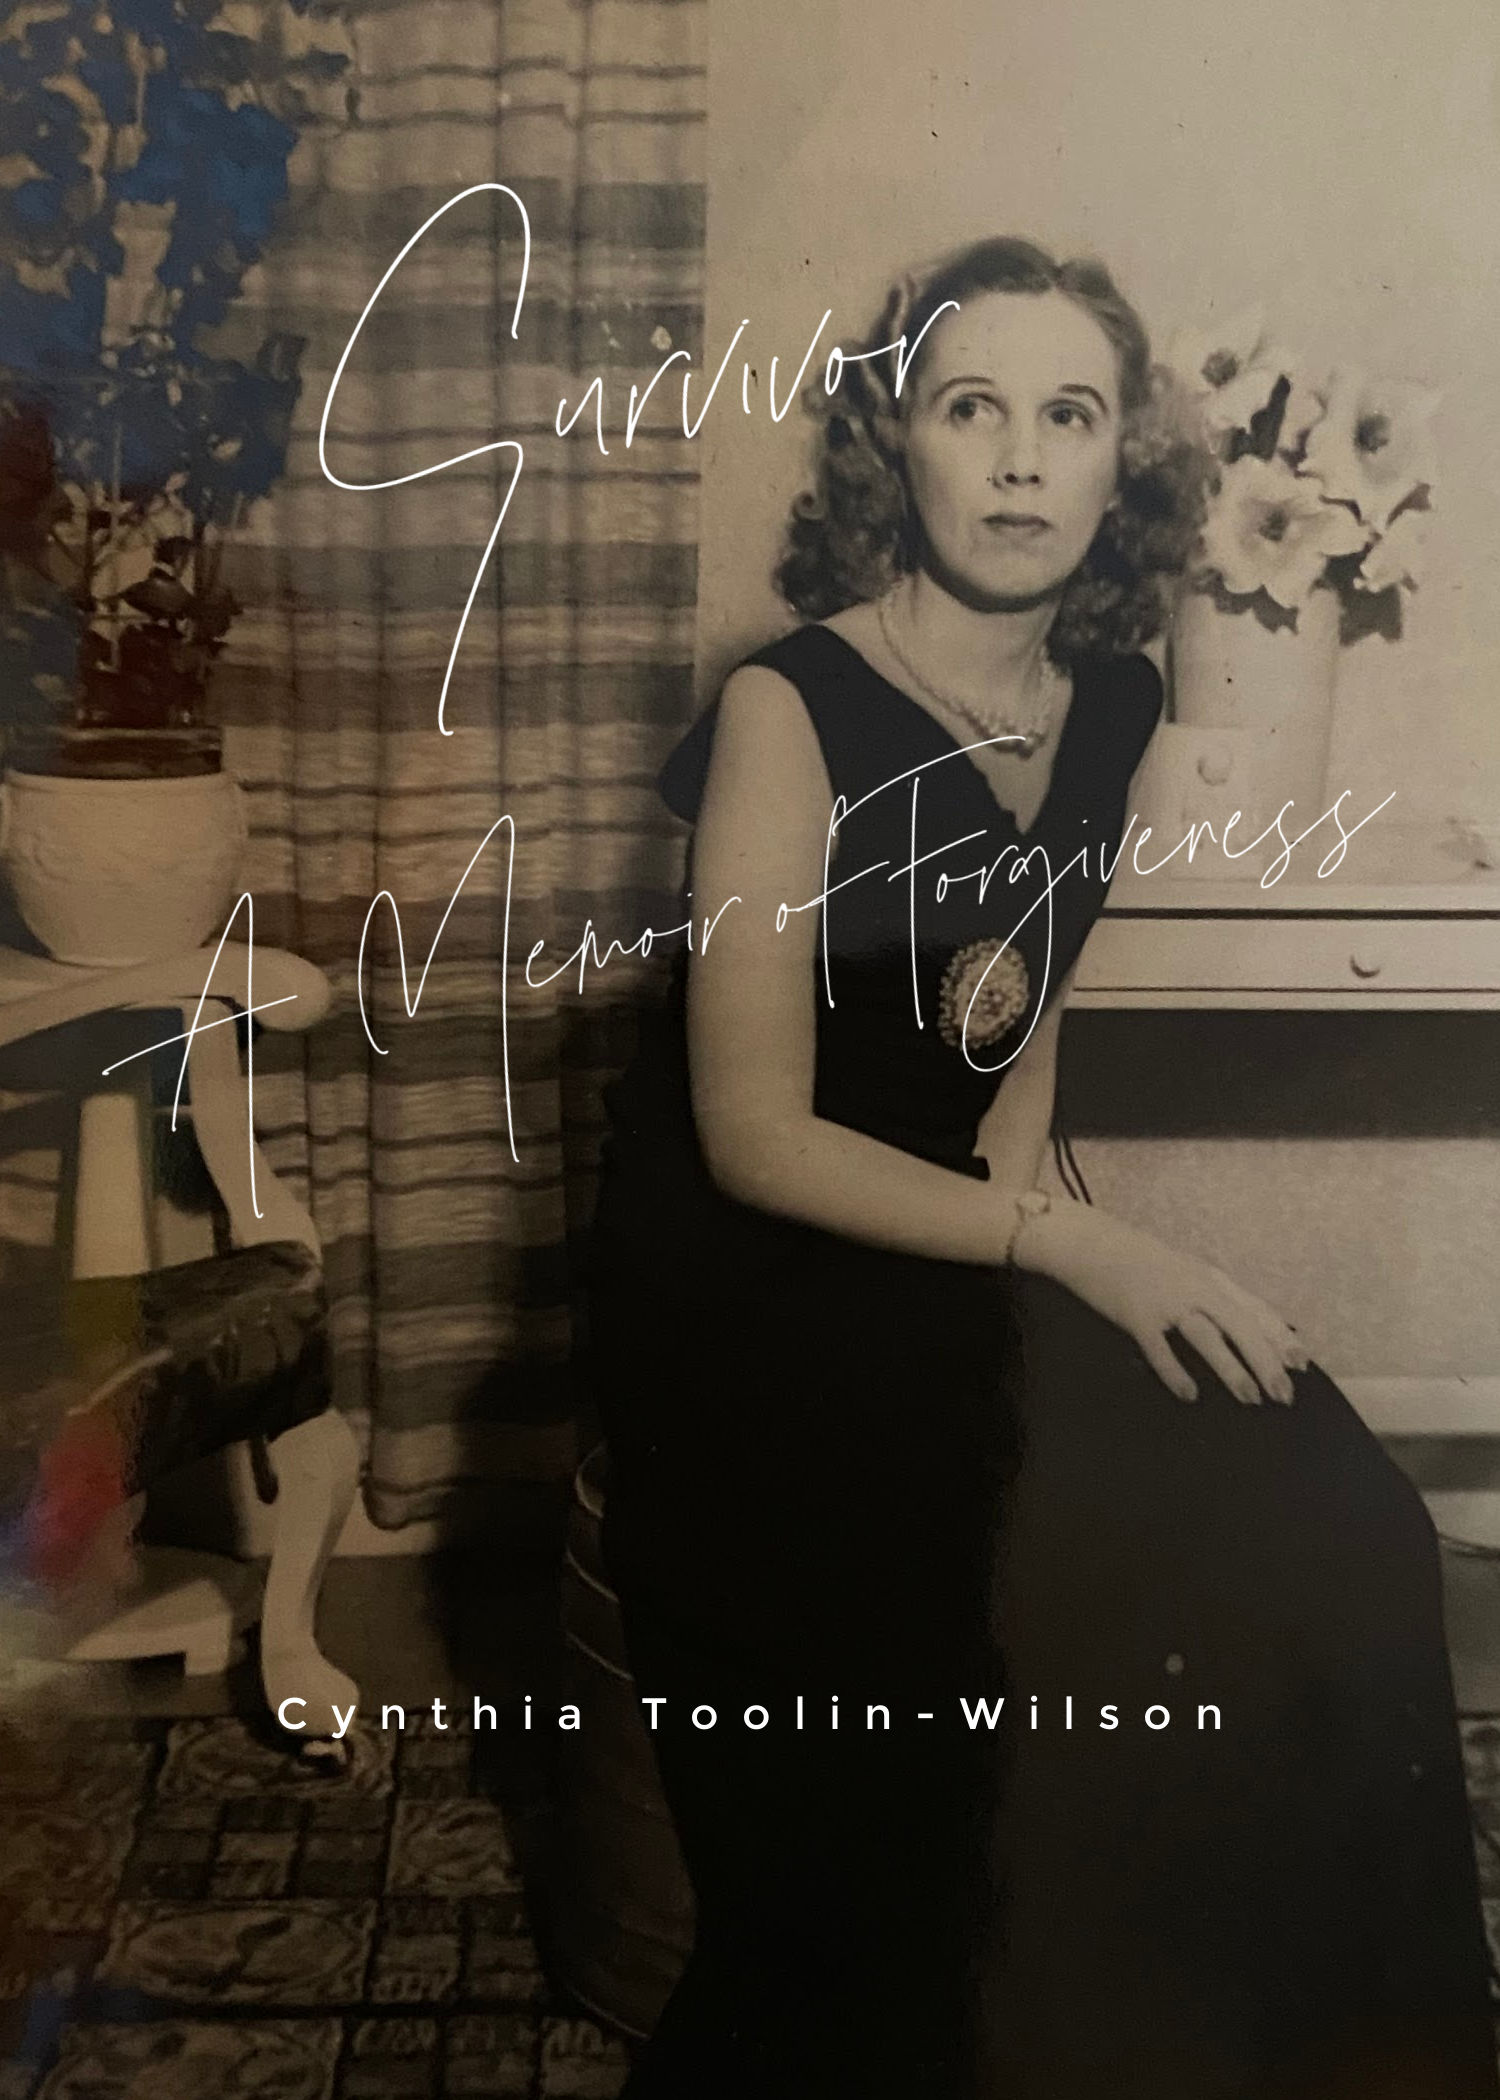 Survivor: A Memoir of Forgiveness by Cynthia Toolin-Wilson